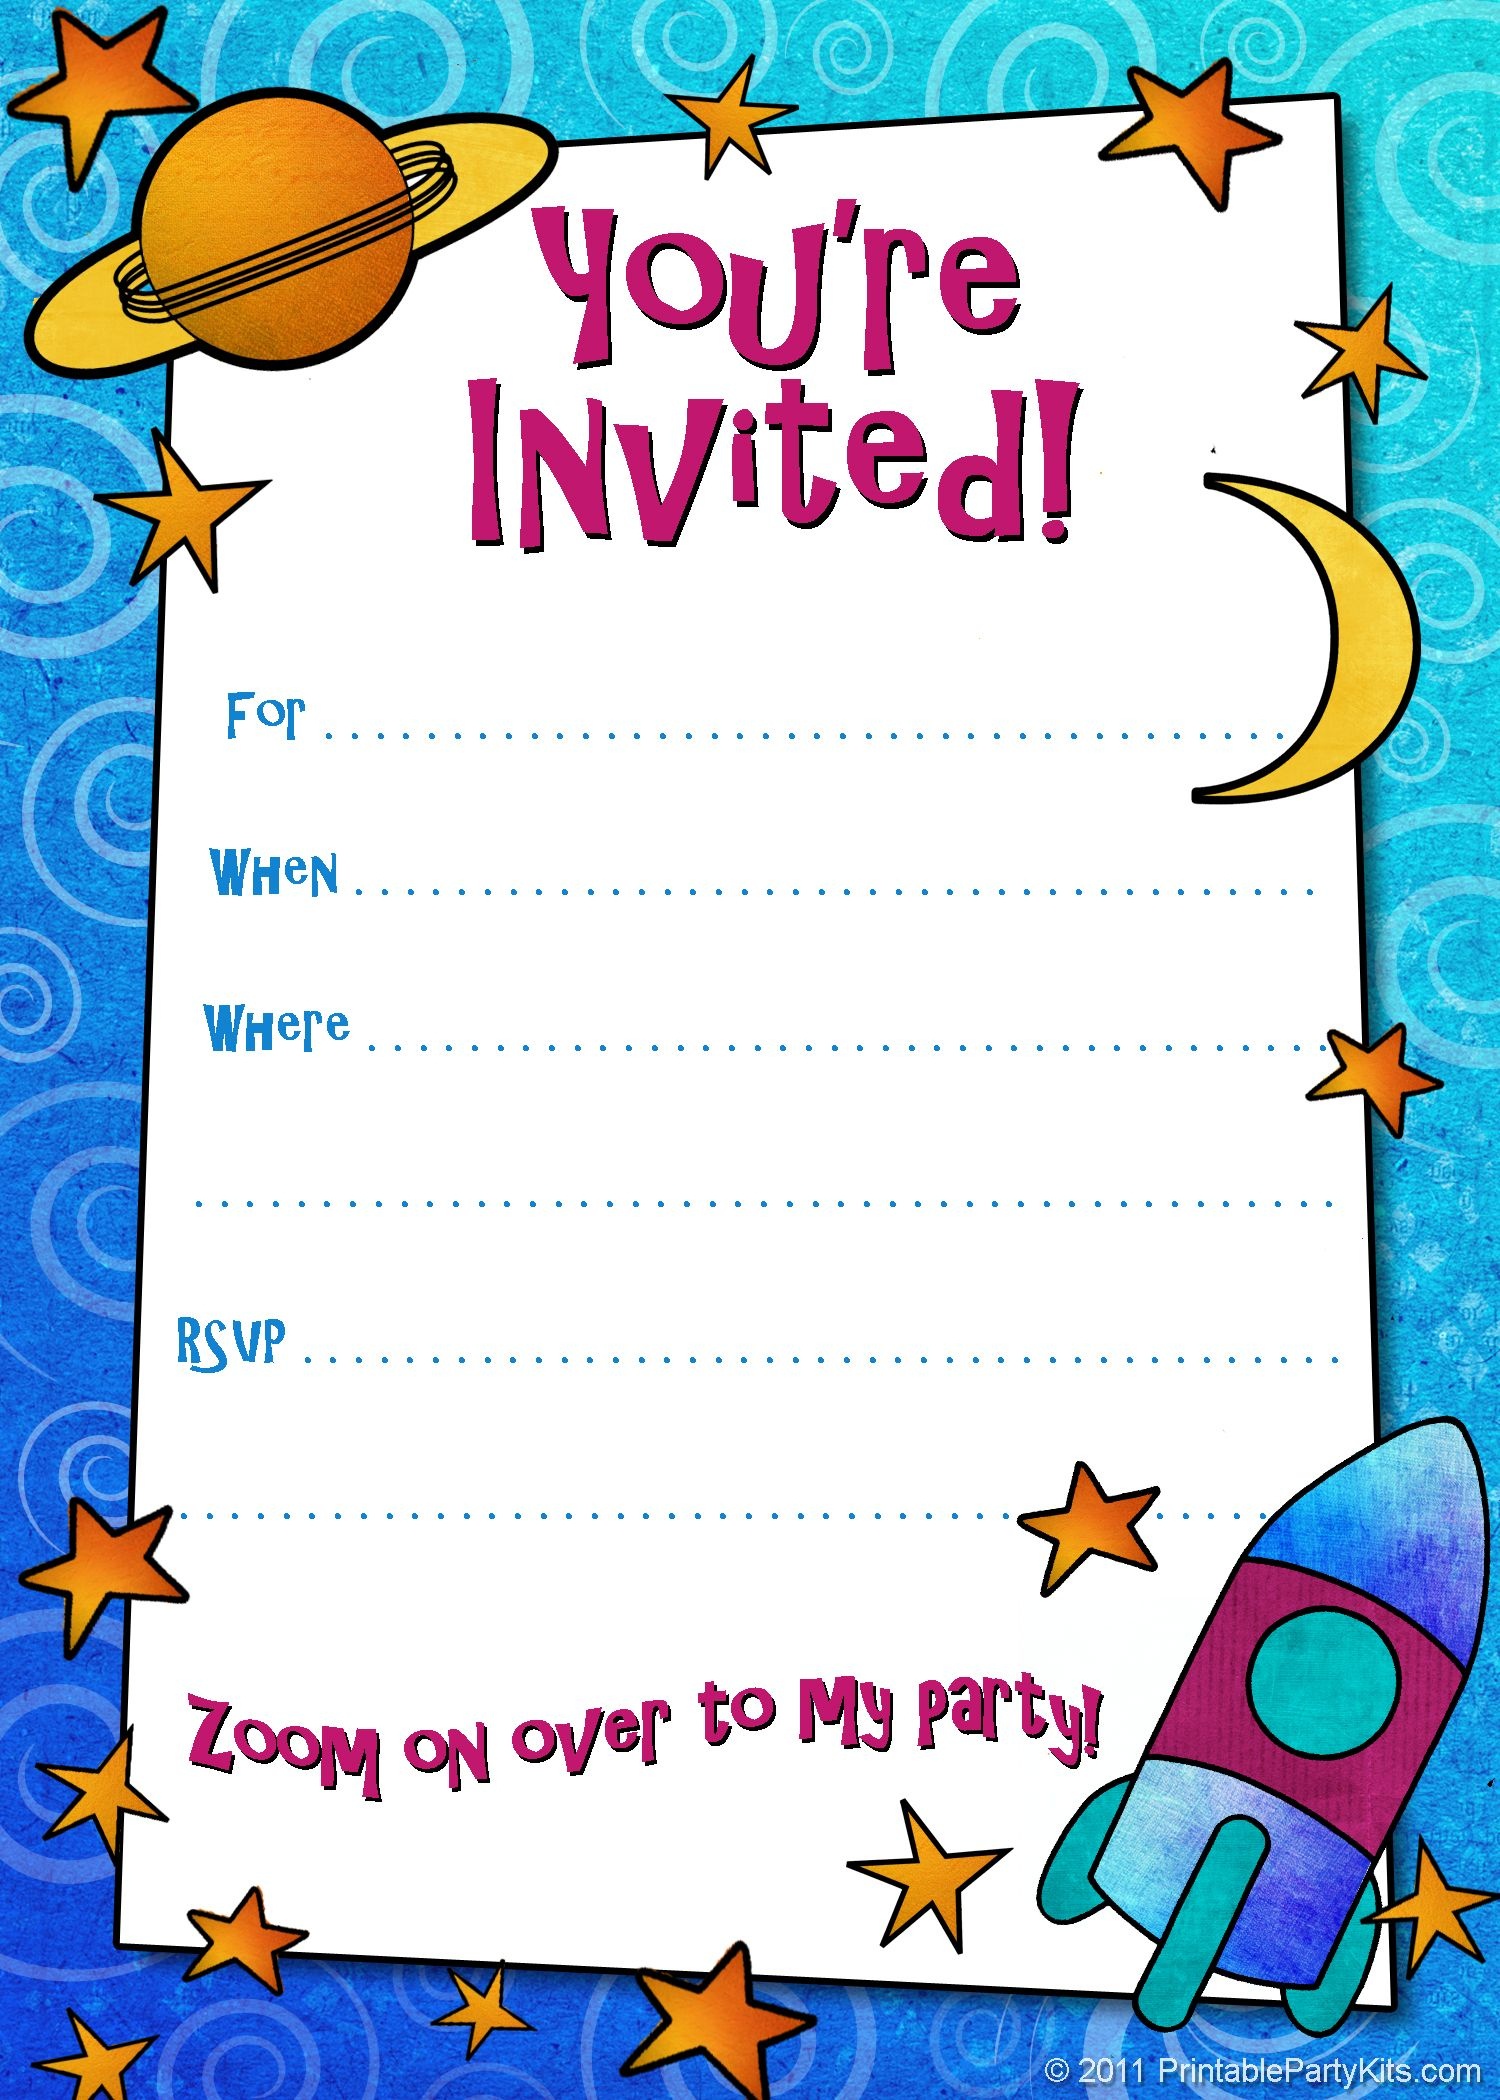 Free Printable Boys Birthday Party Invitations | Birthday Party - Free Printable Personalized Birthday Invitation Cards